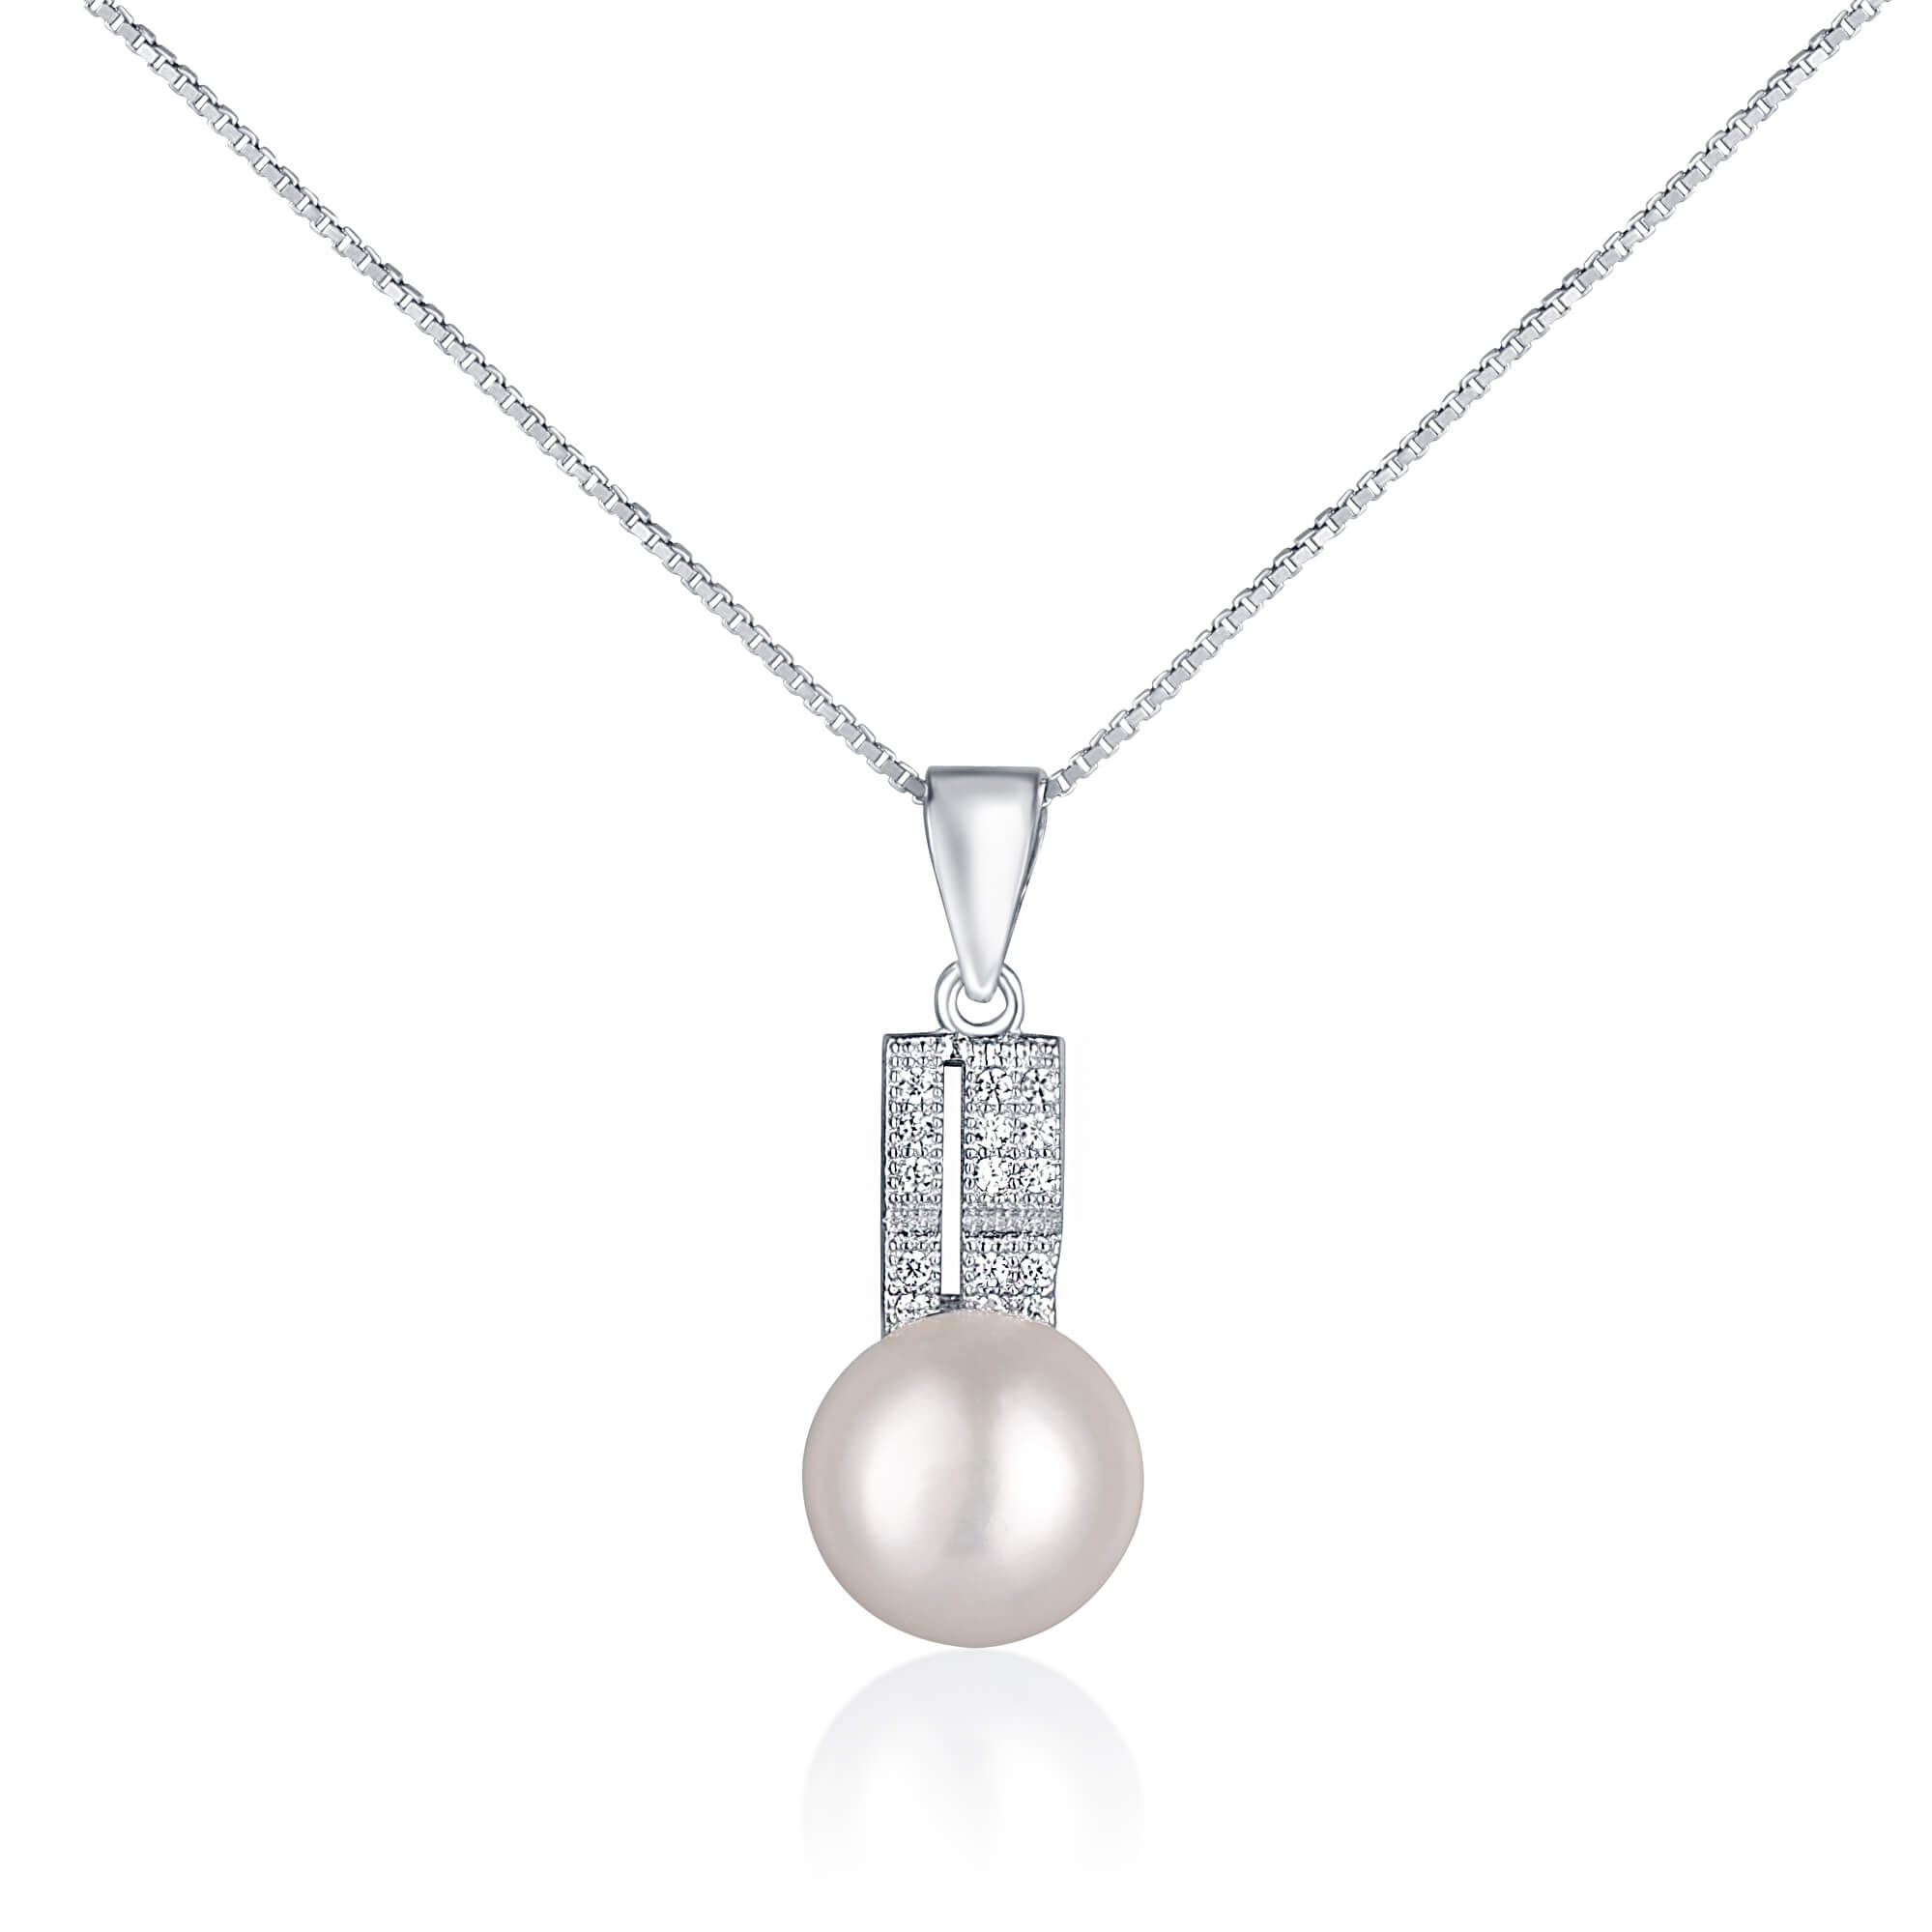 JwL Luxury Pearls Elegantný náhrdelník s pravou perlou a zirkónmi JL0645 (retiazka, prívesok)